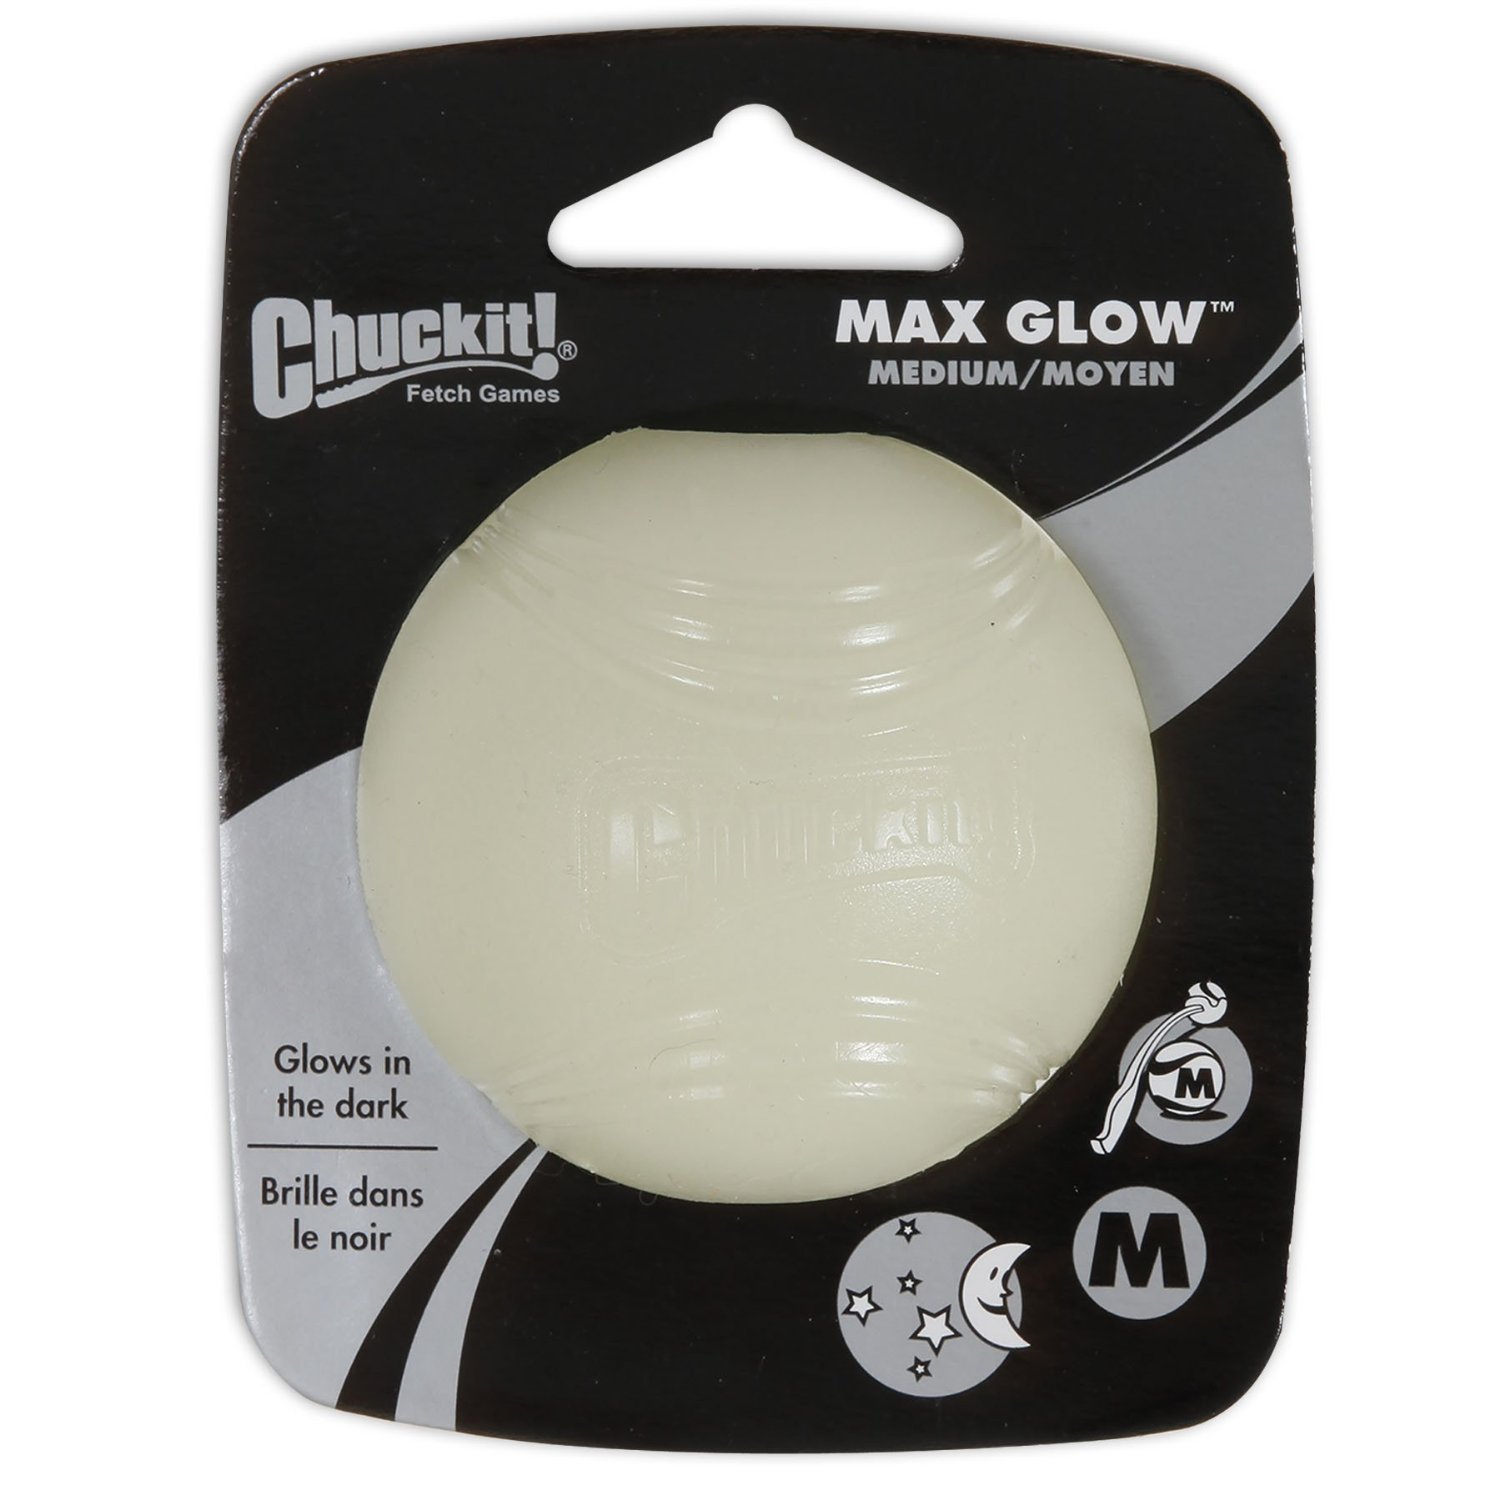 Chuckit! 6 Pack of Max Glow Dog Toy Balls, Medium Size